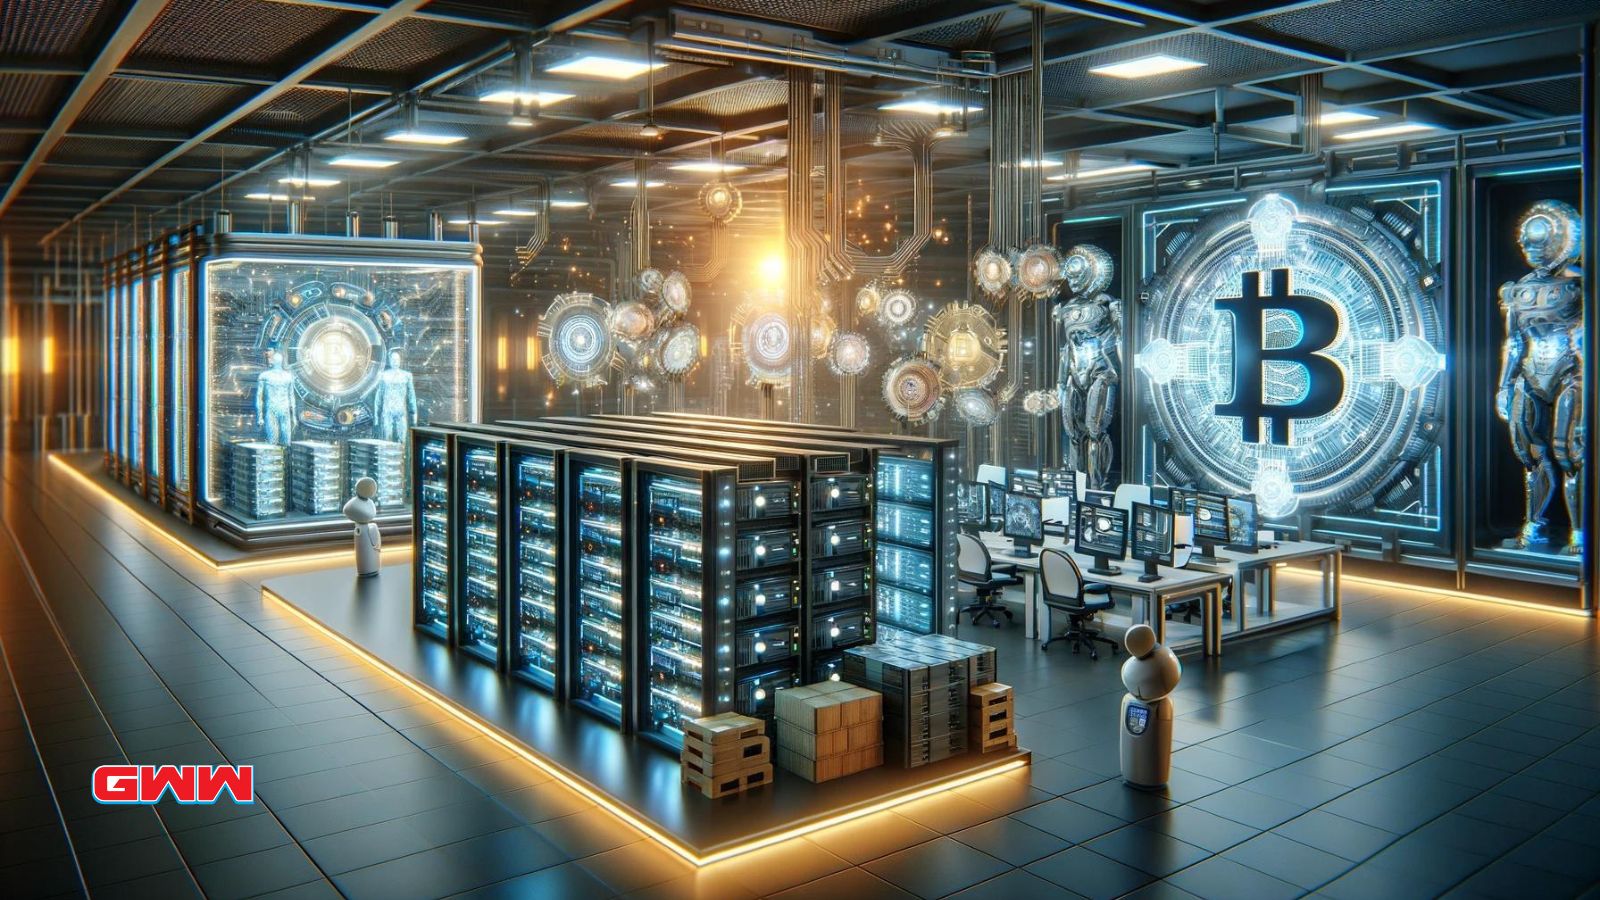 Server room and AI lab, showcasing tech integration